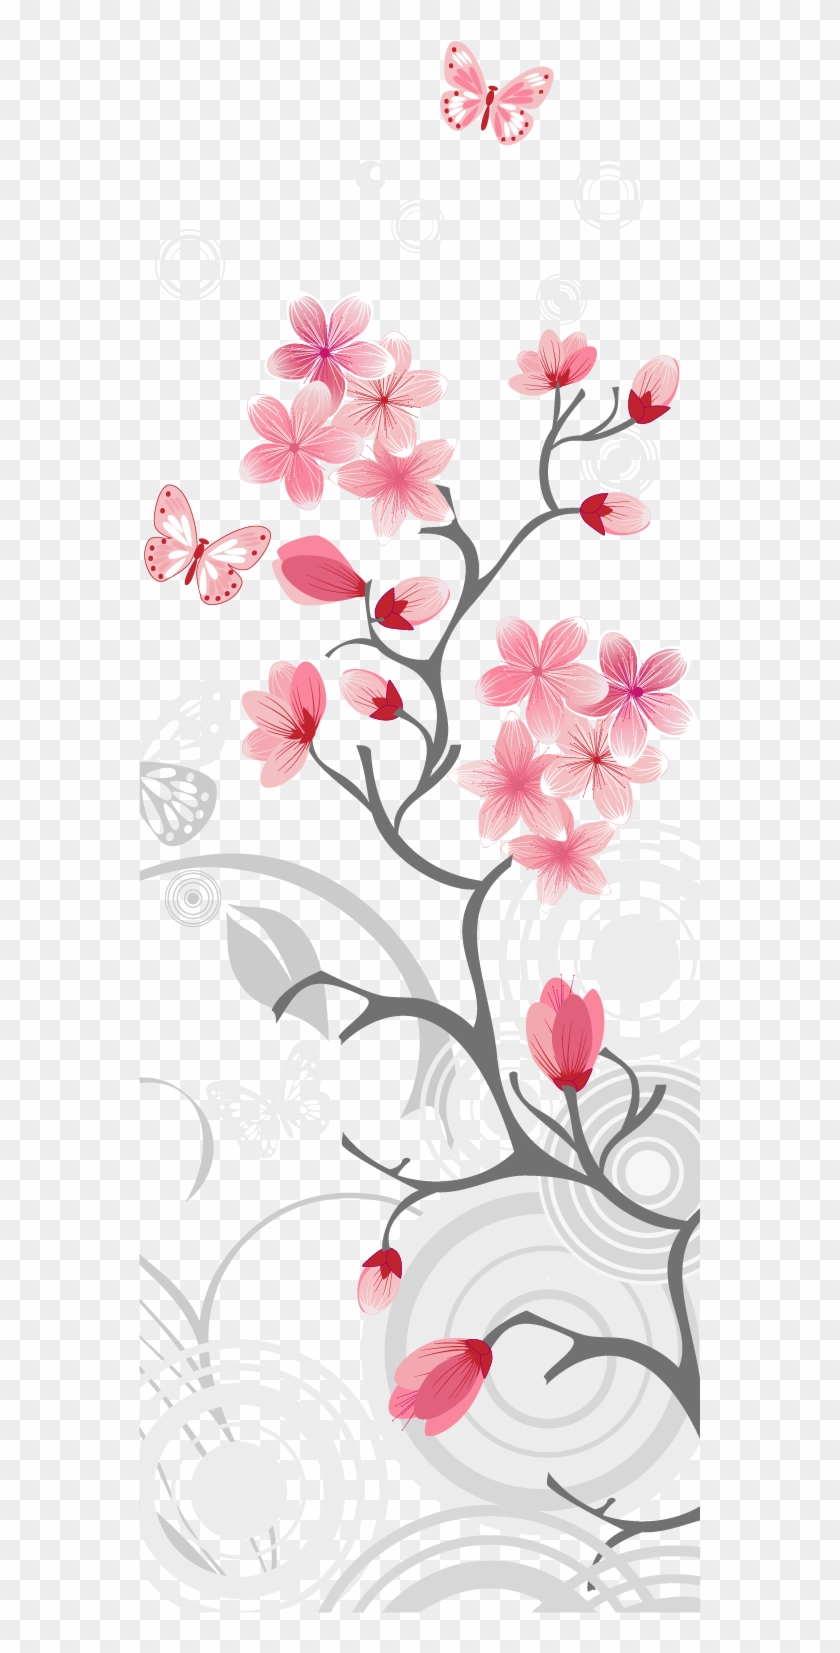 Cherry Blossom Illustration - Cherry Blossom Illustration #803235